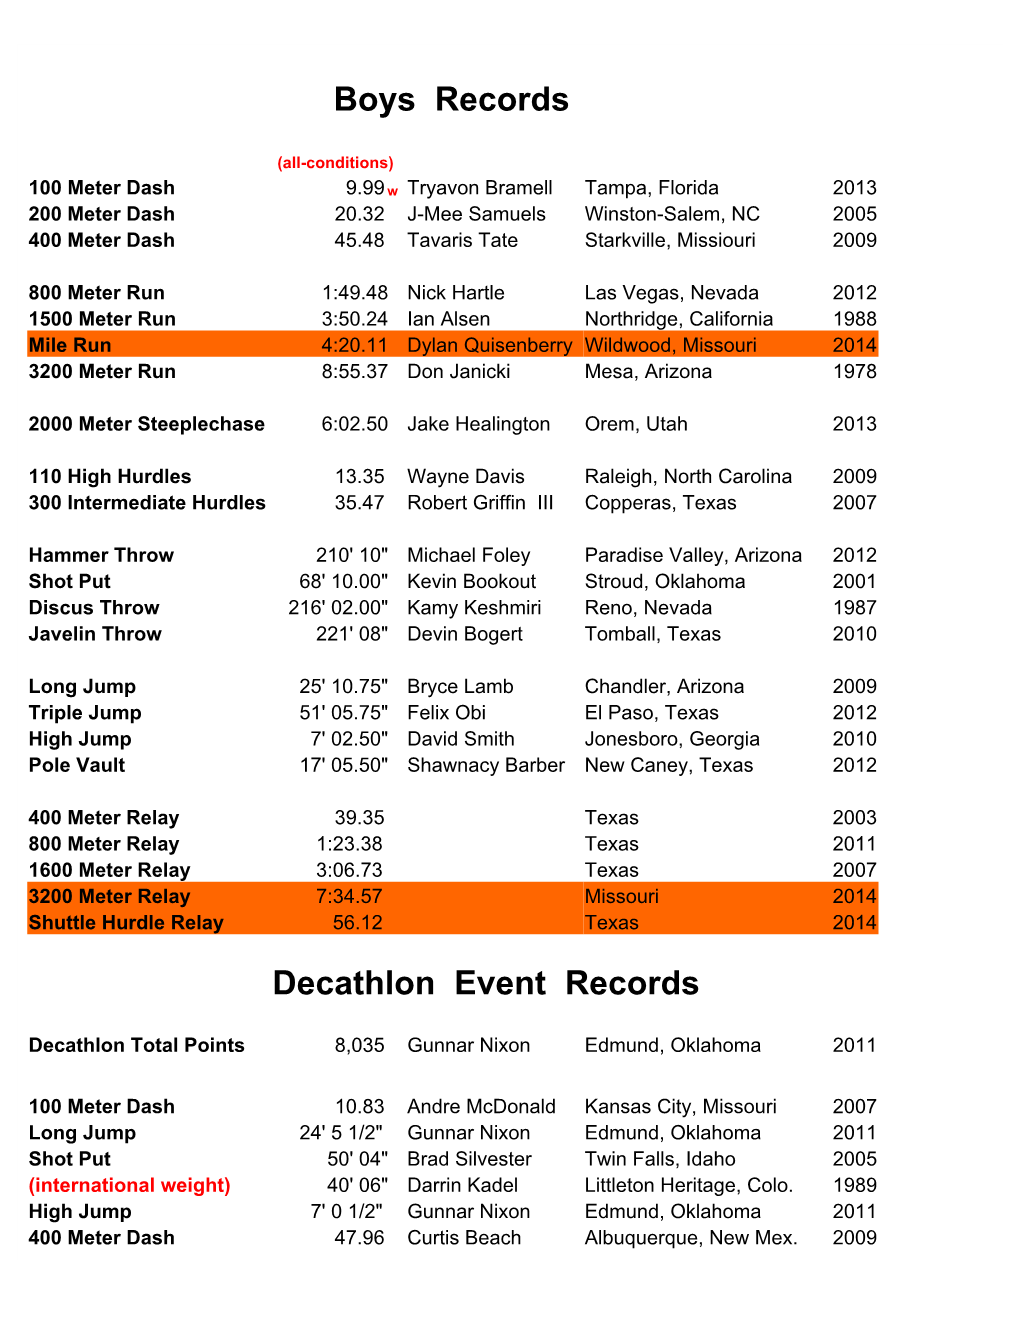 Boys Records Decathlon Event Records